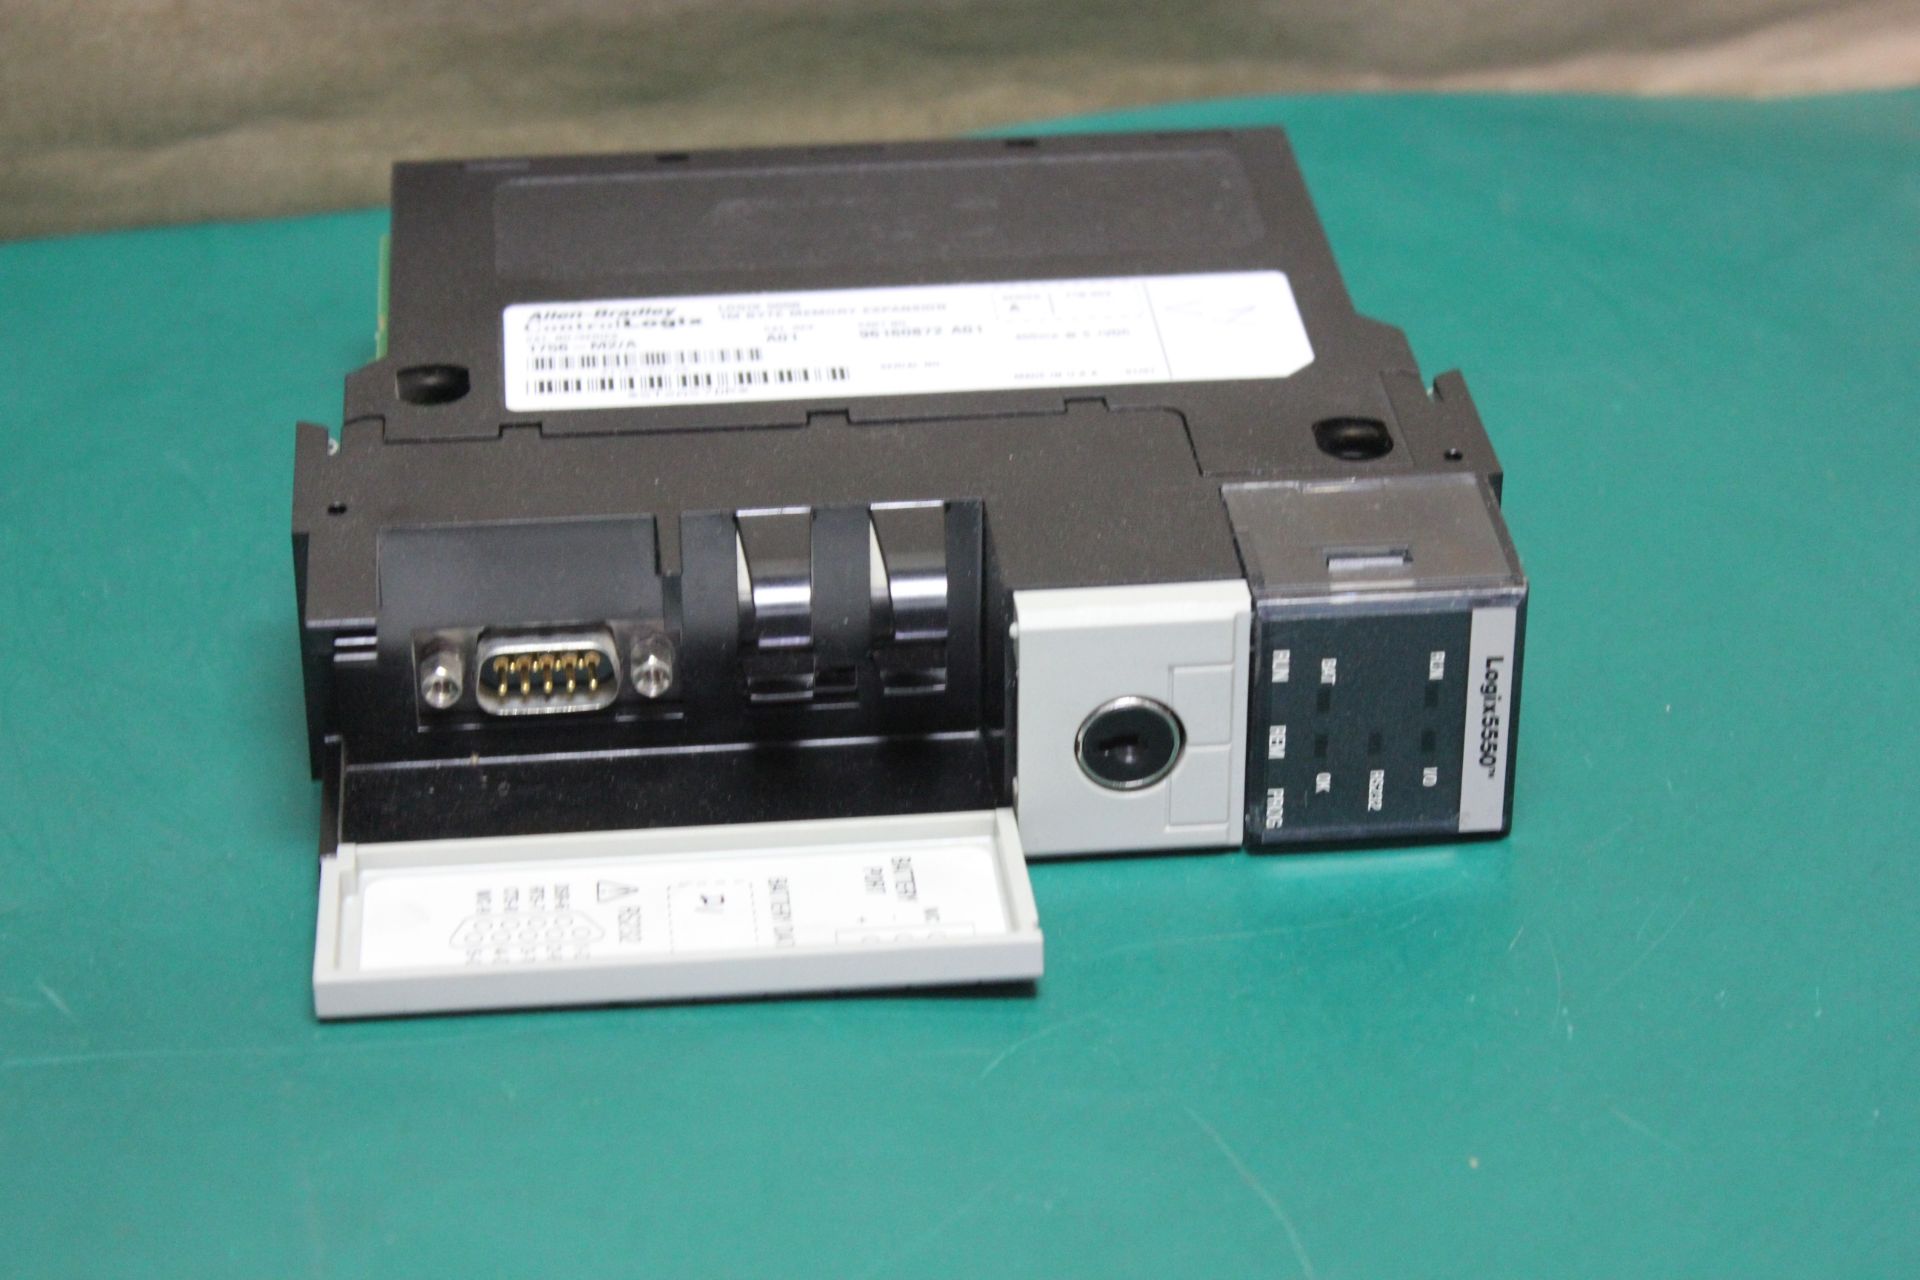 ALLEN BRADLEY LOGIX 5550 PLC PROCESSOR WITH MEMORY EXPANSION MODULE - Image 2 of 3